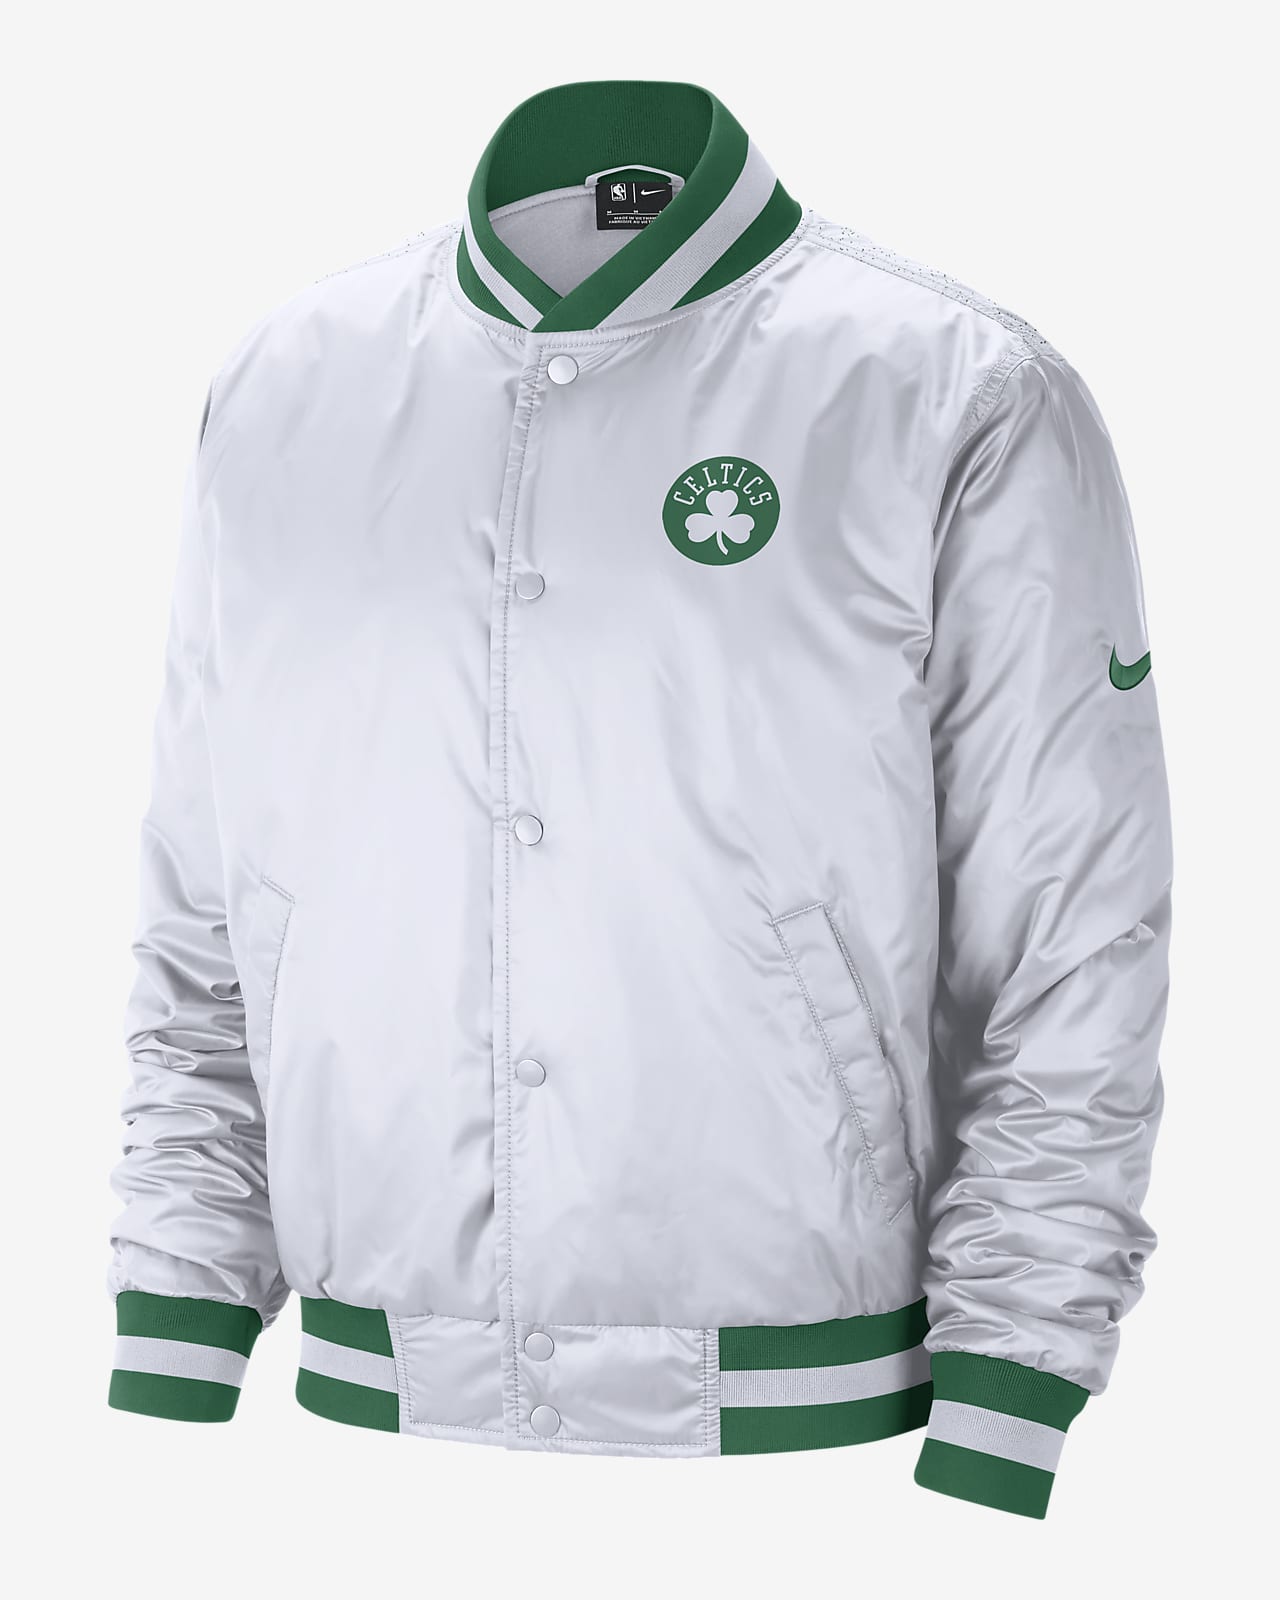 Boston Celtics City Edition Courtside Men's Nike NBA Jacket